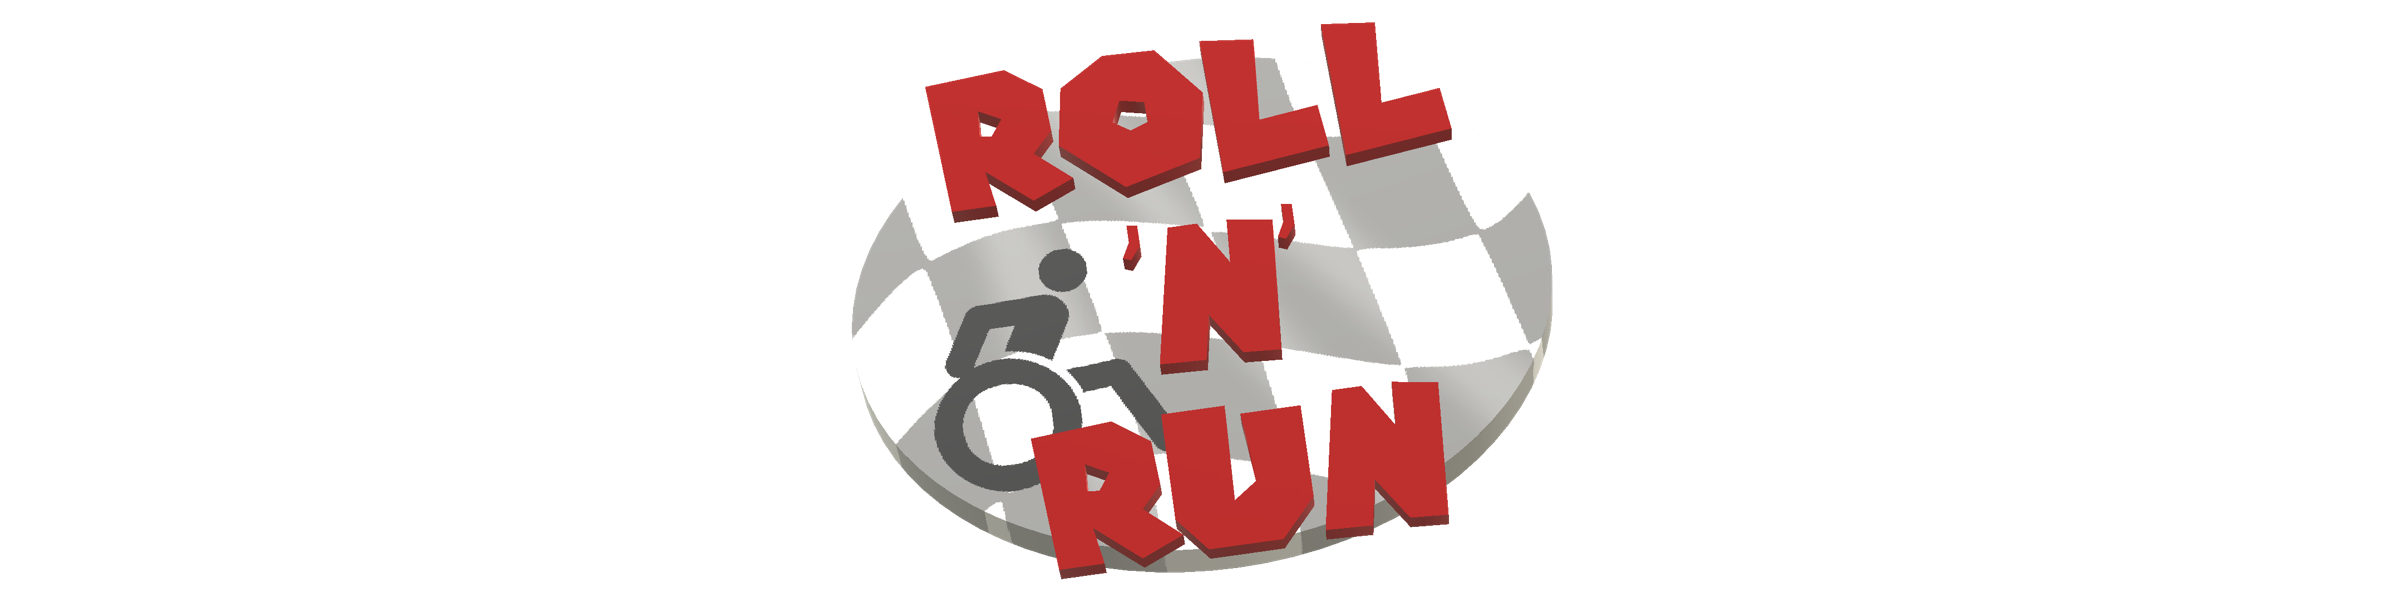 Roll'n'Run